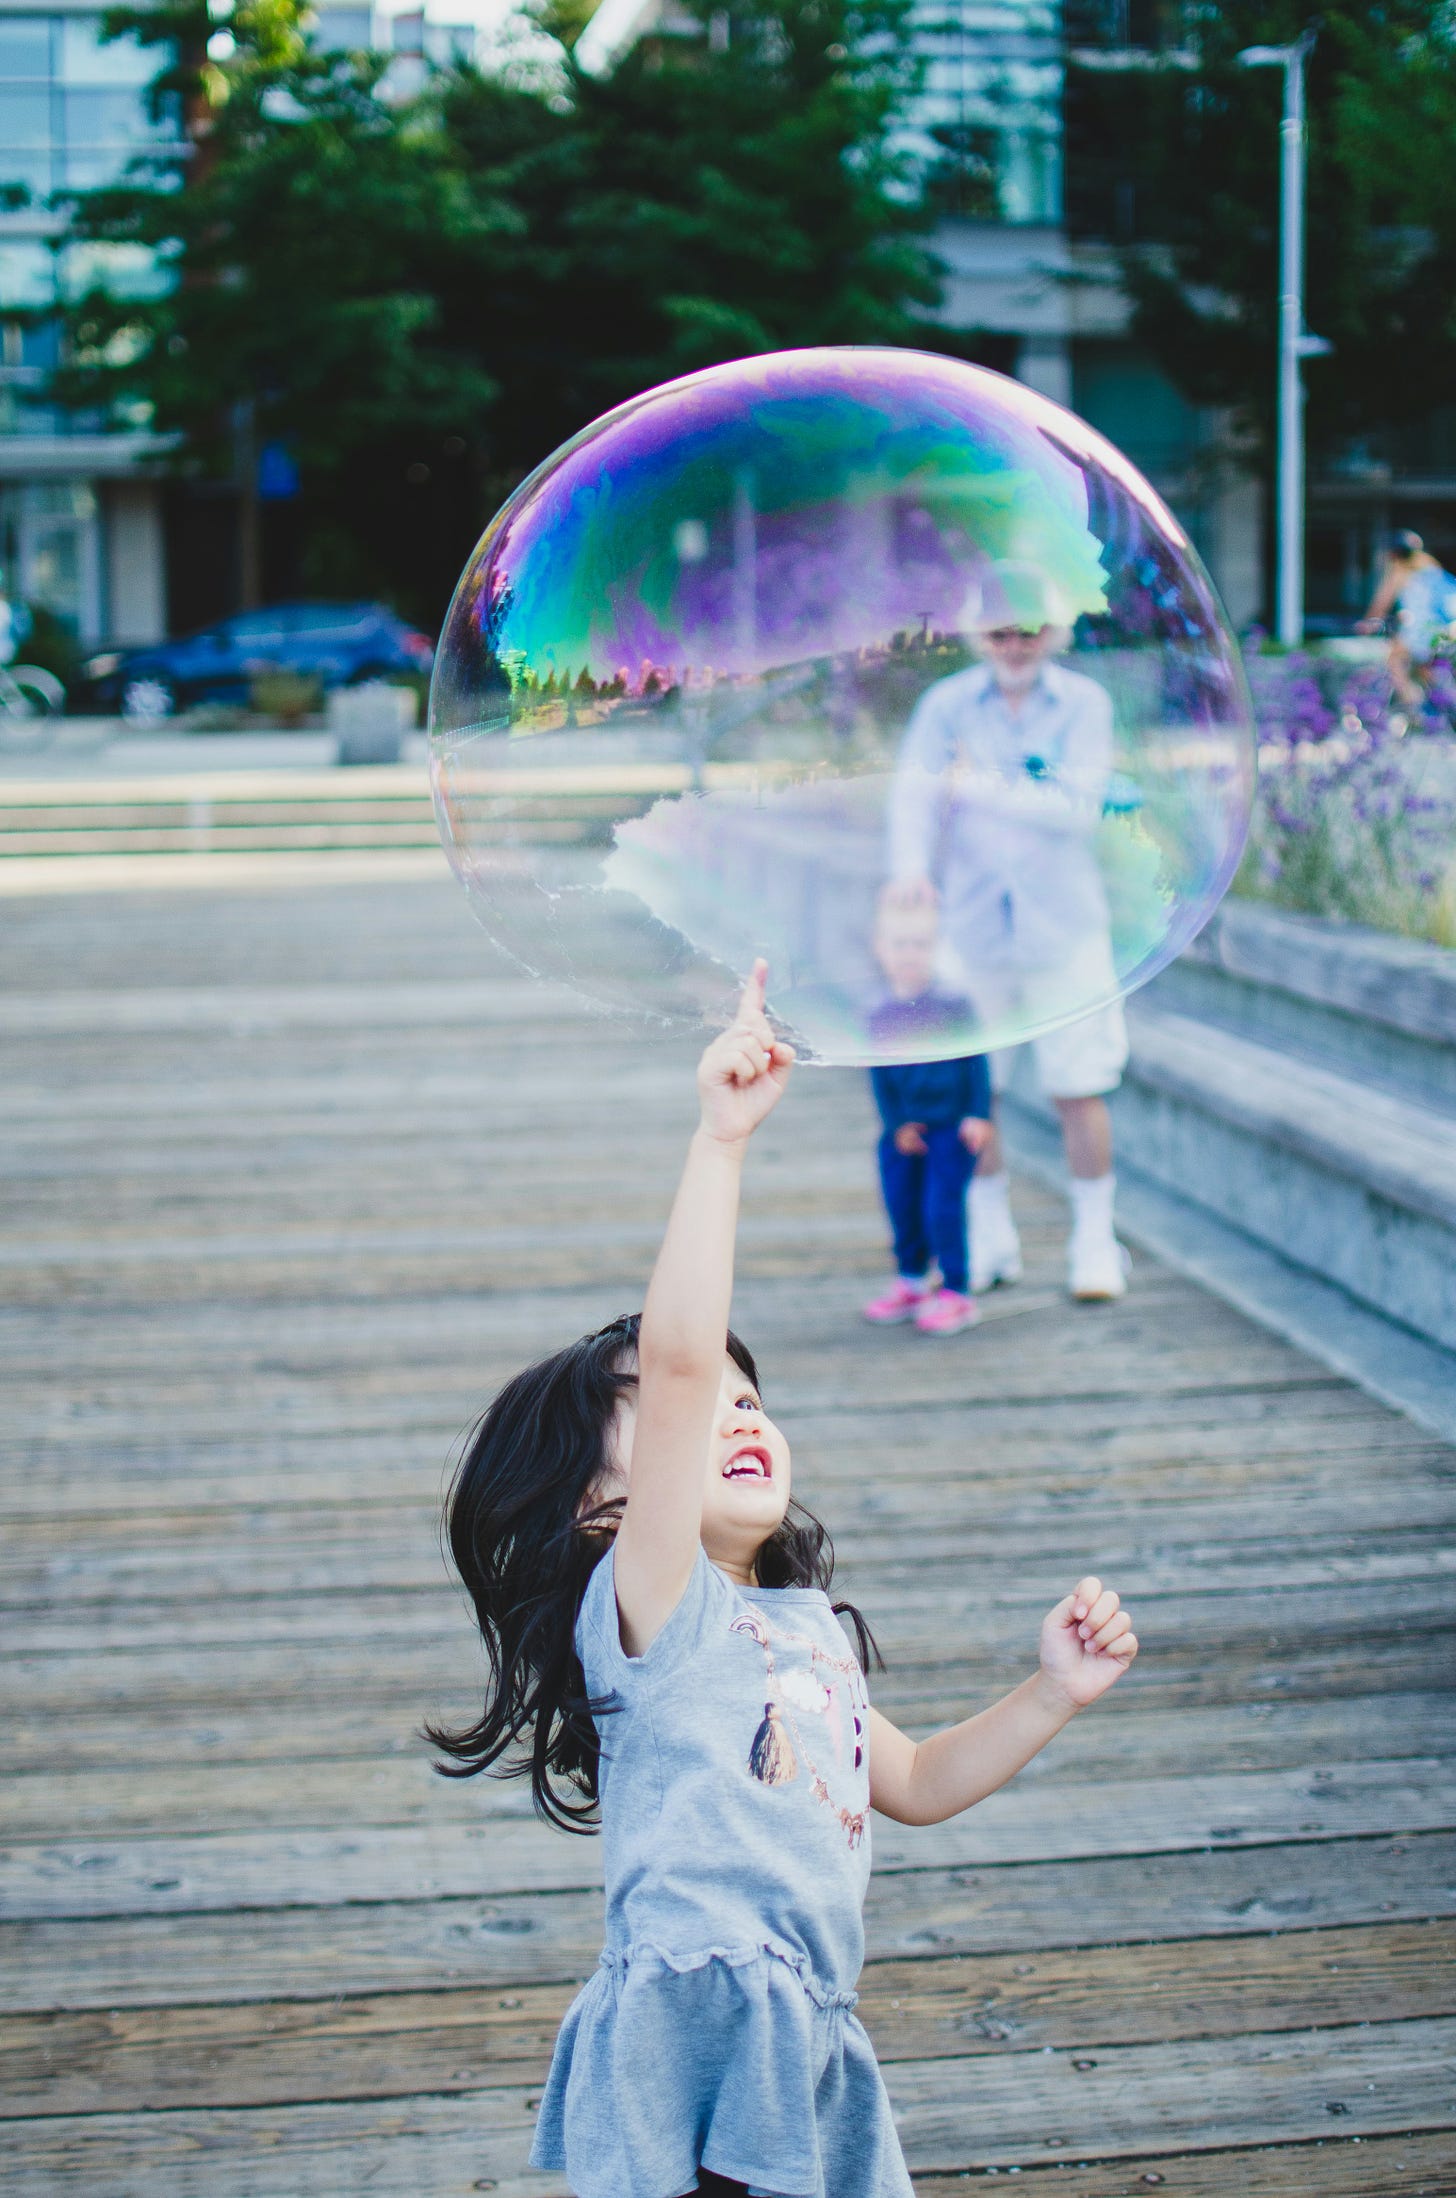 Child poking a large bubble